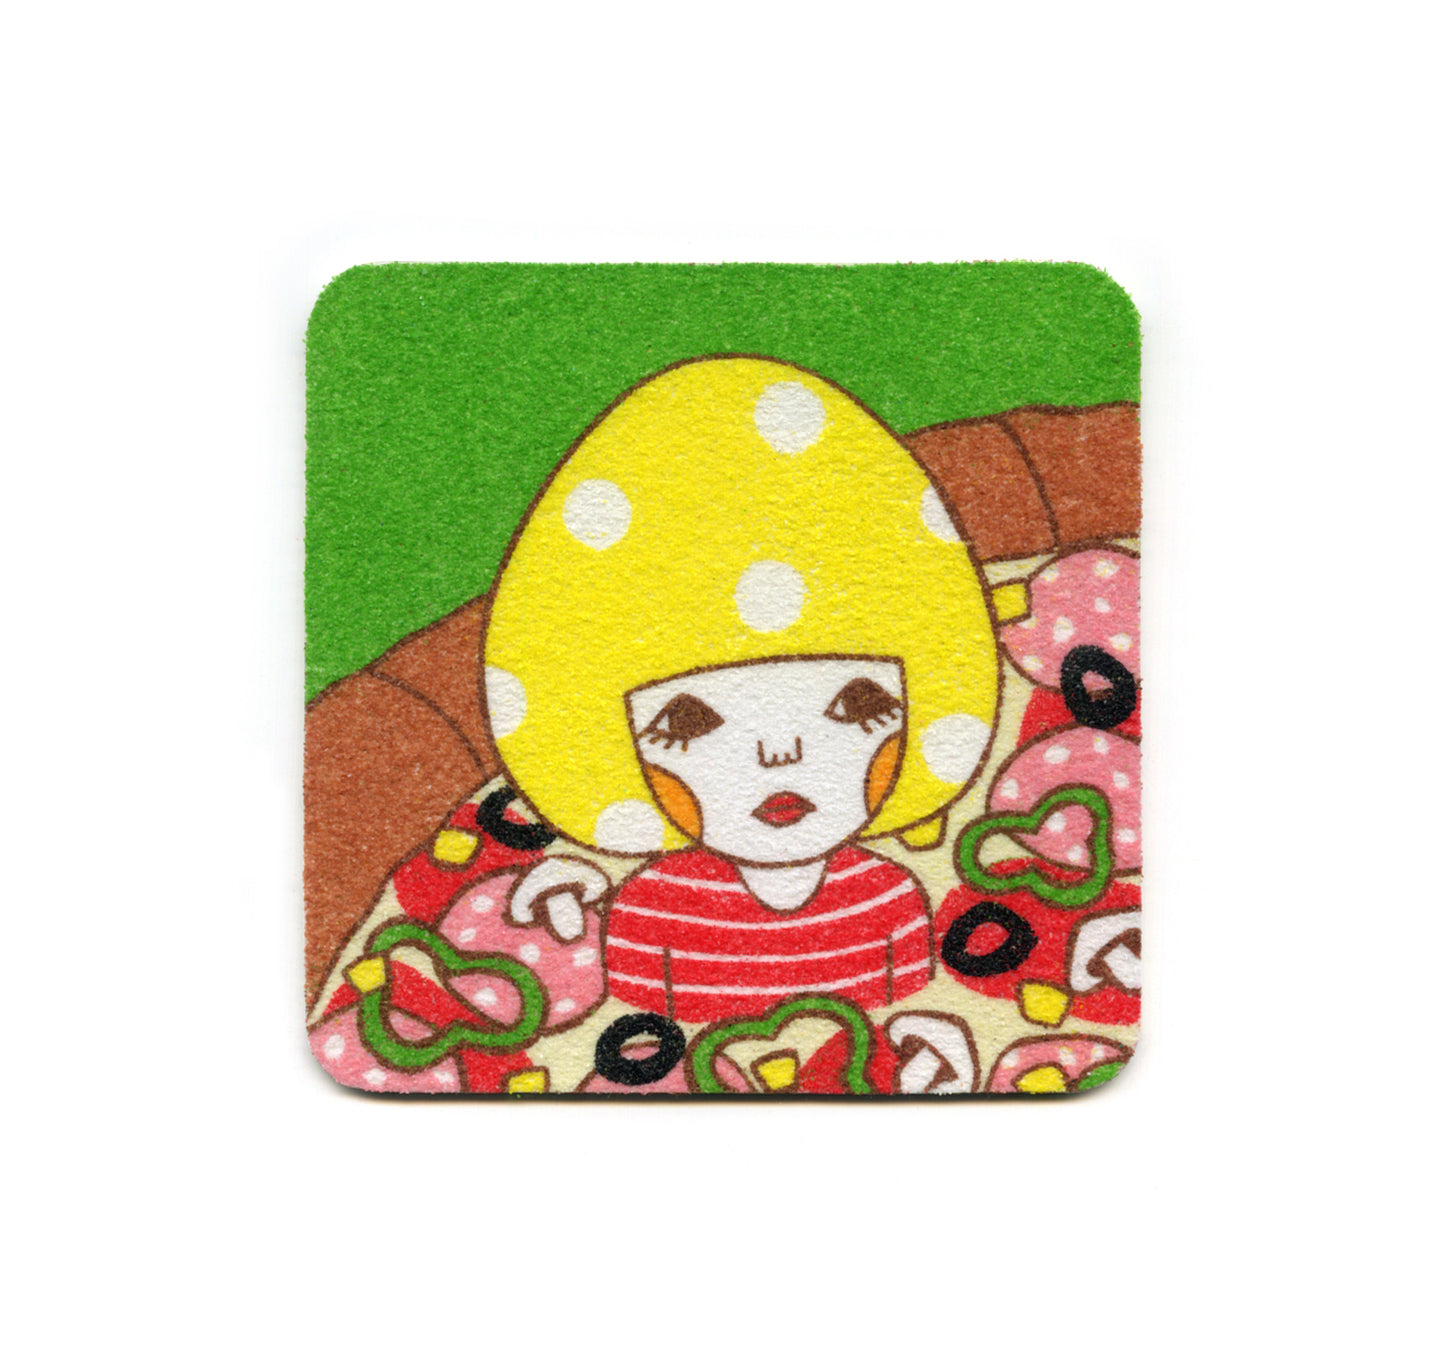 S2 Naoshi - In A Pizza 1 Coaster